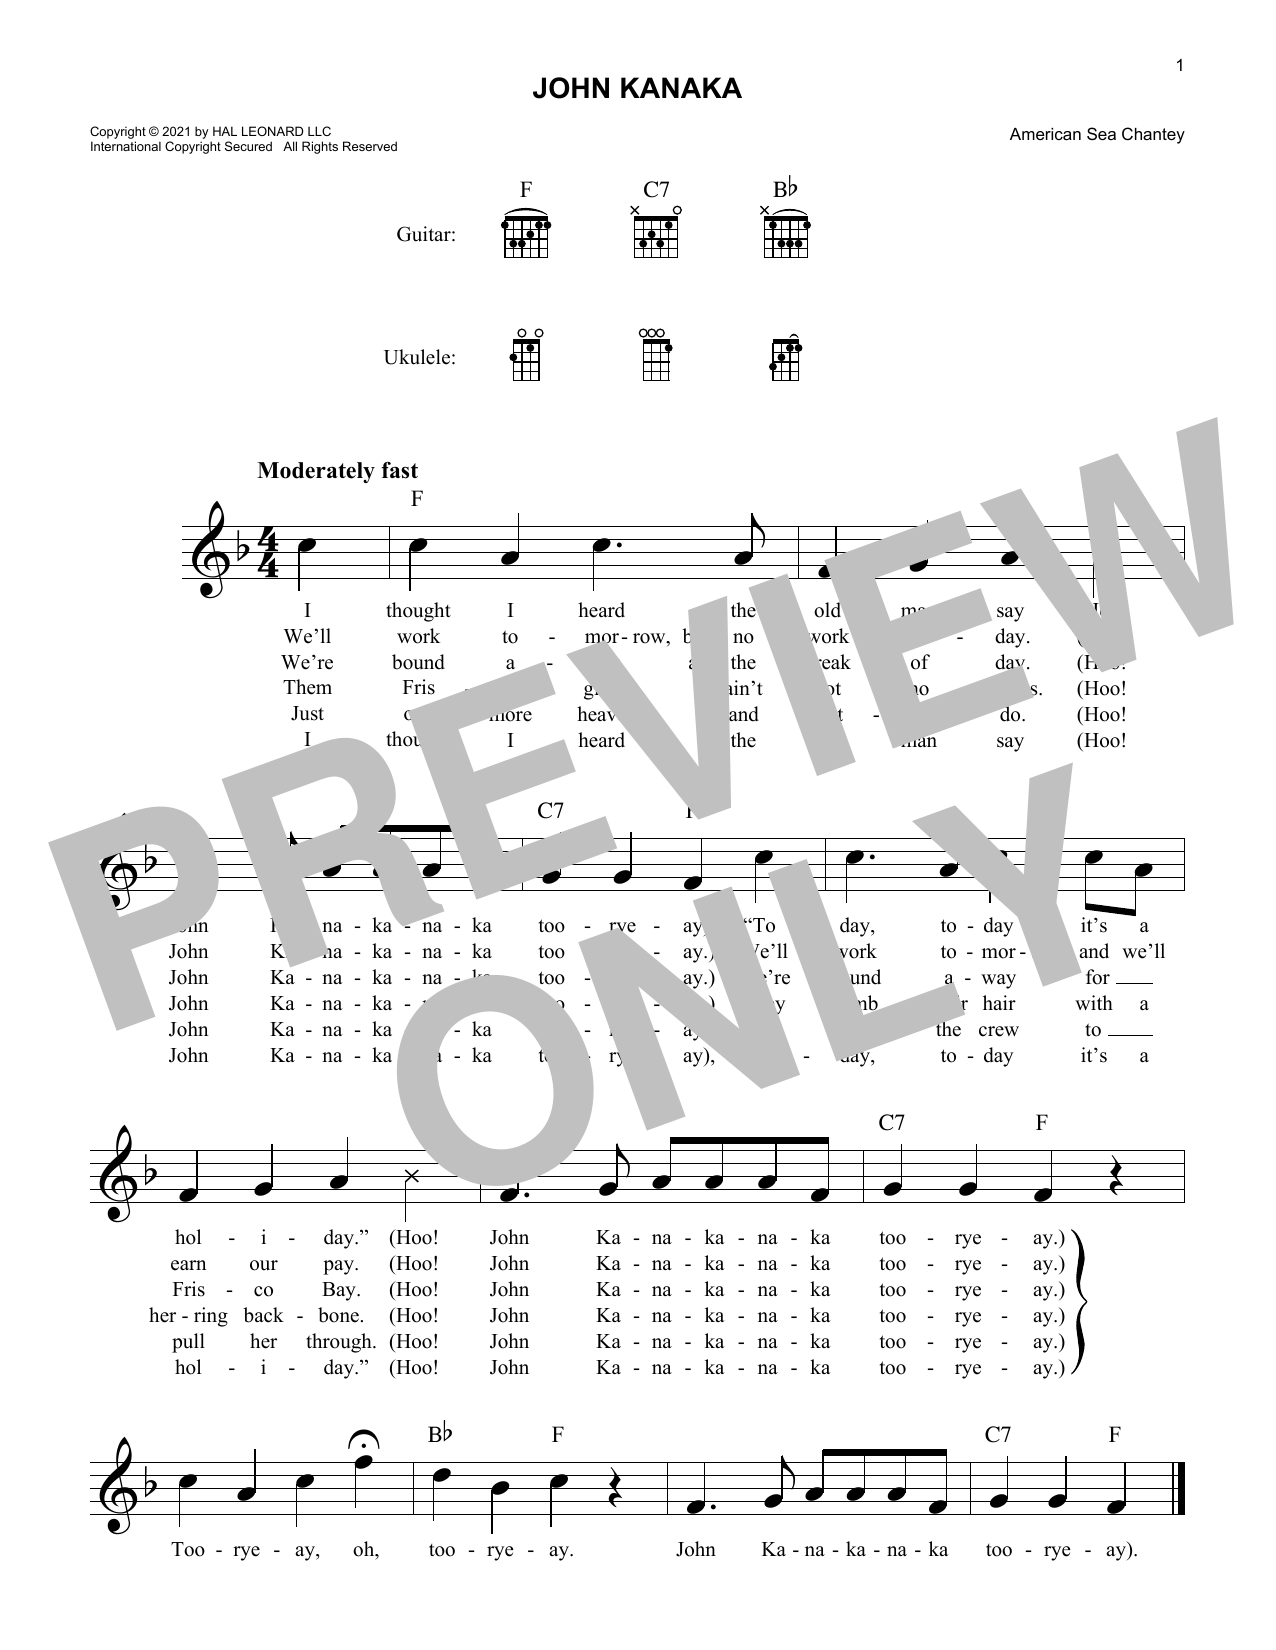 American Sea Chantey John Kanaka sheet music notes and chords arranged for Lead Sheet / Fake Book